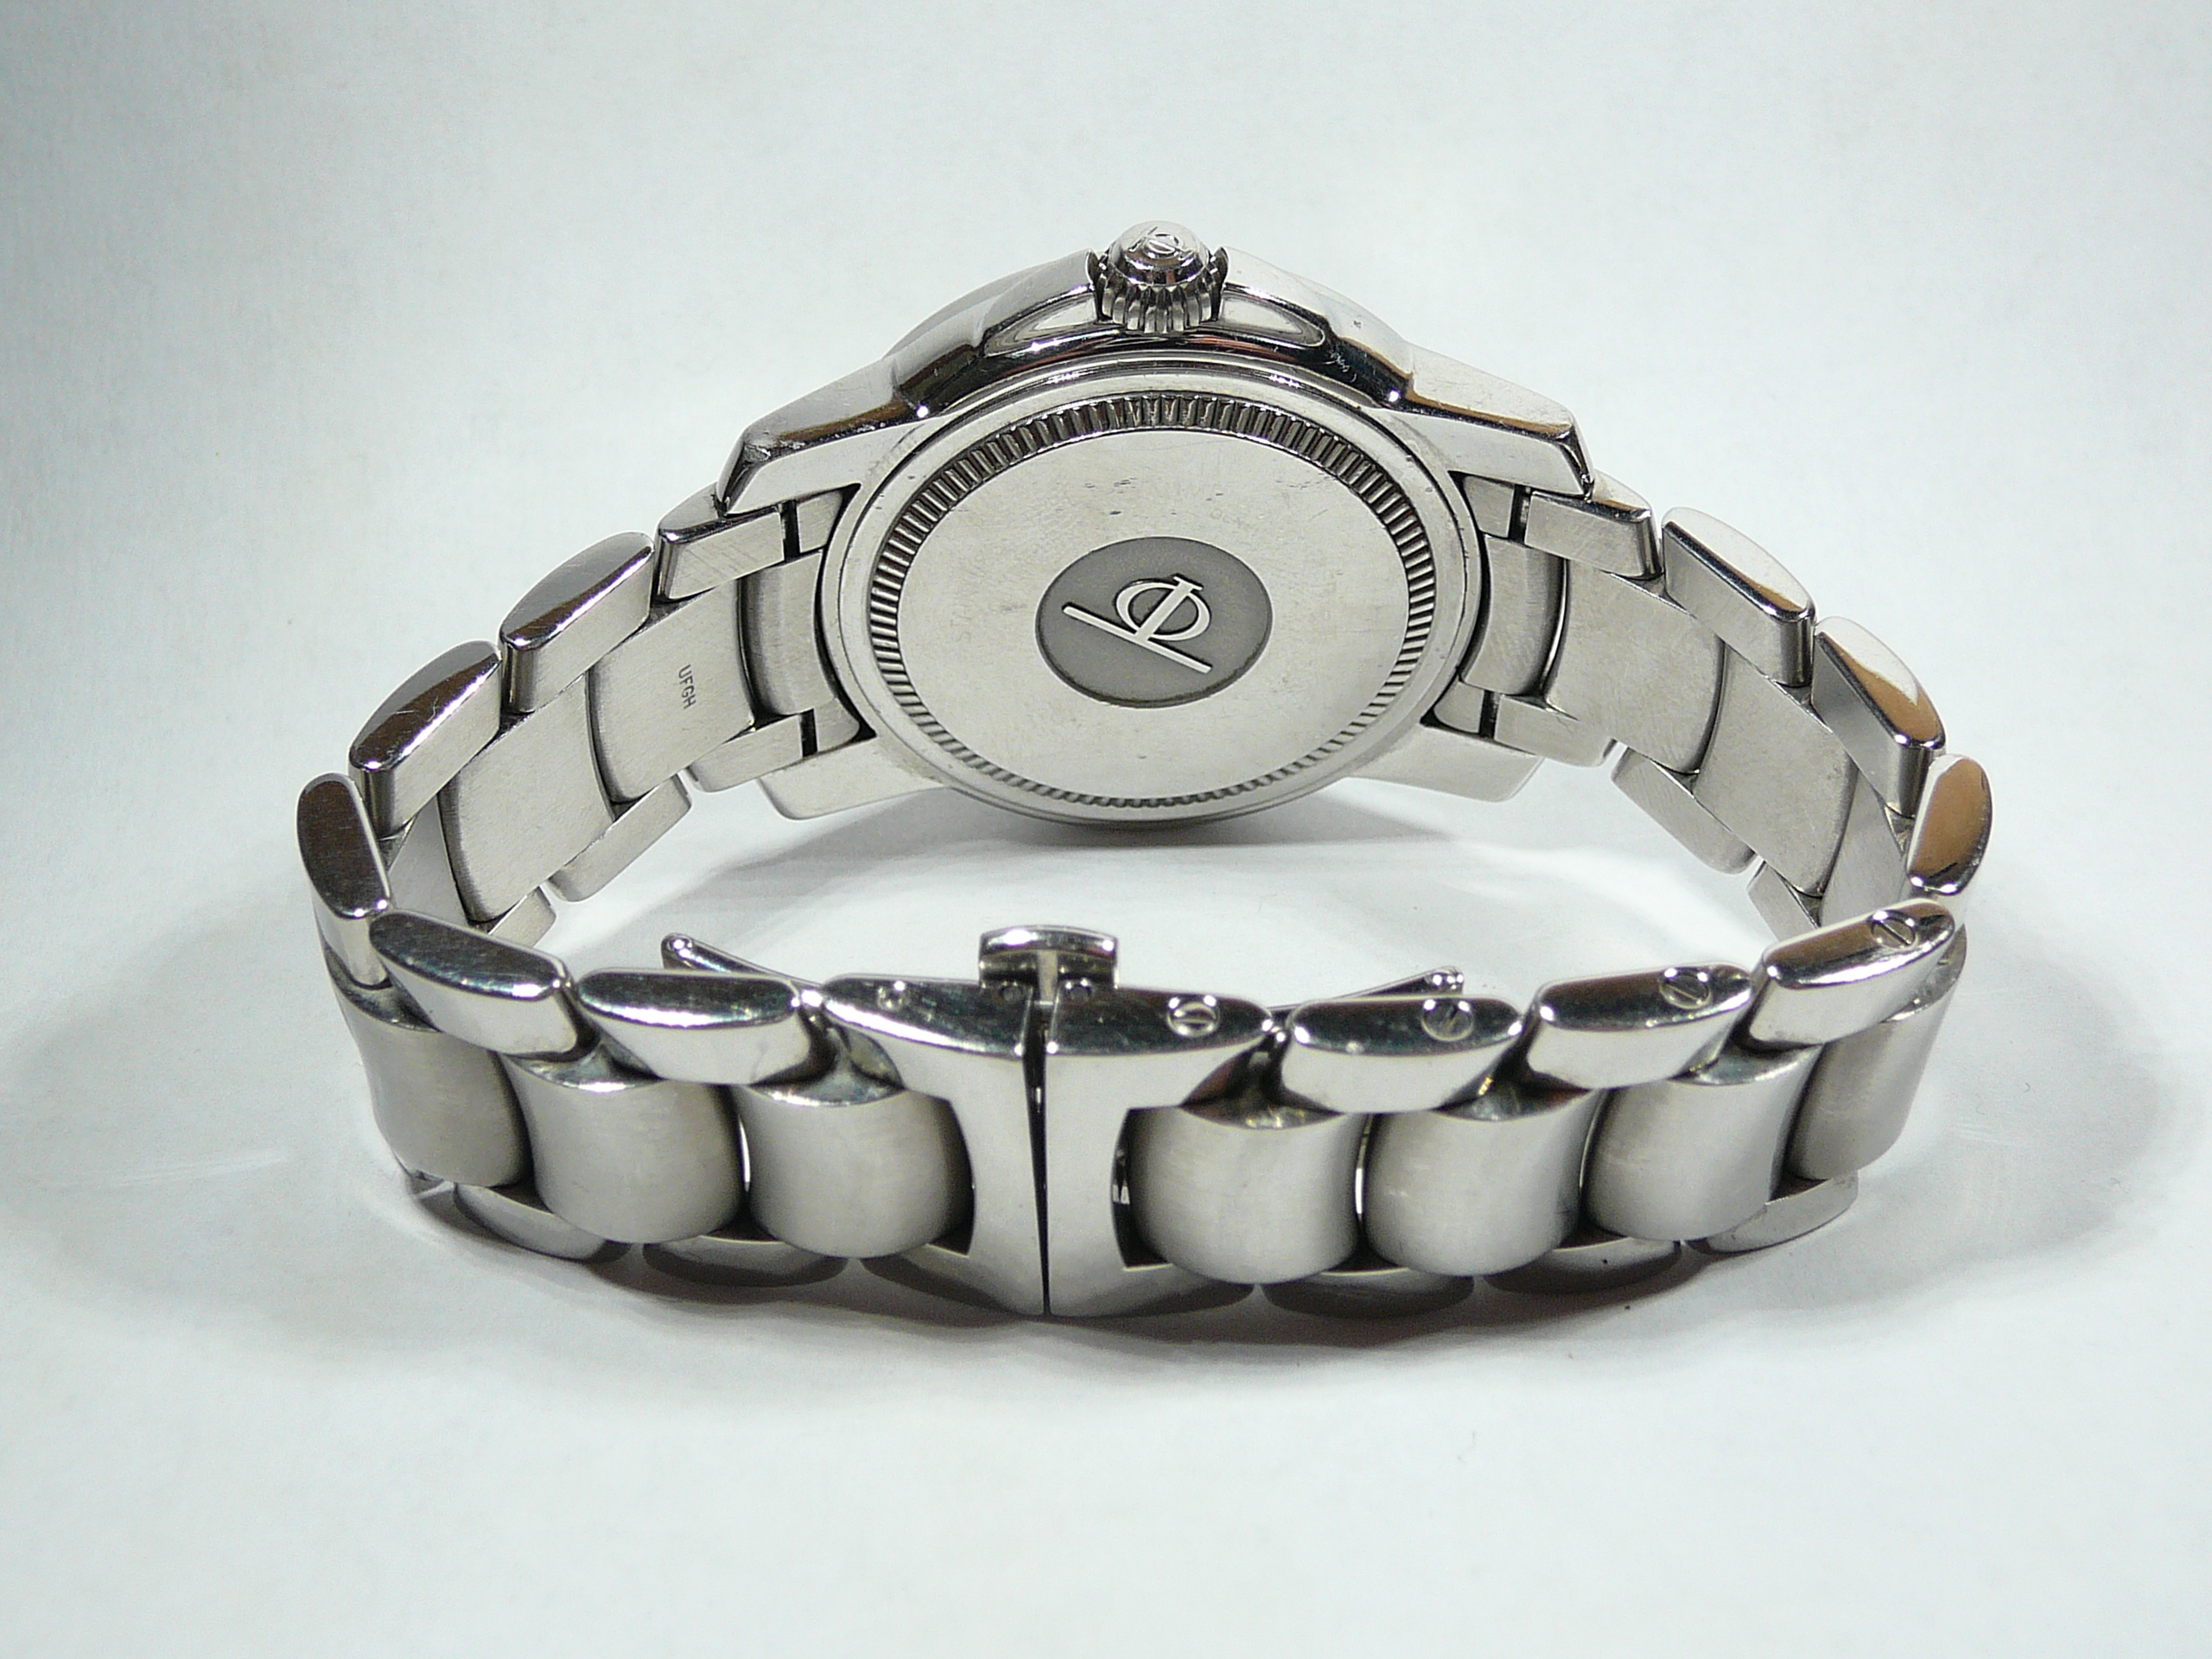 Gents Baume & Mercier Wrist Watch - Image 3 of 3